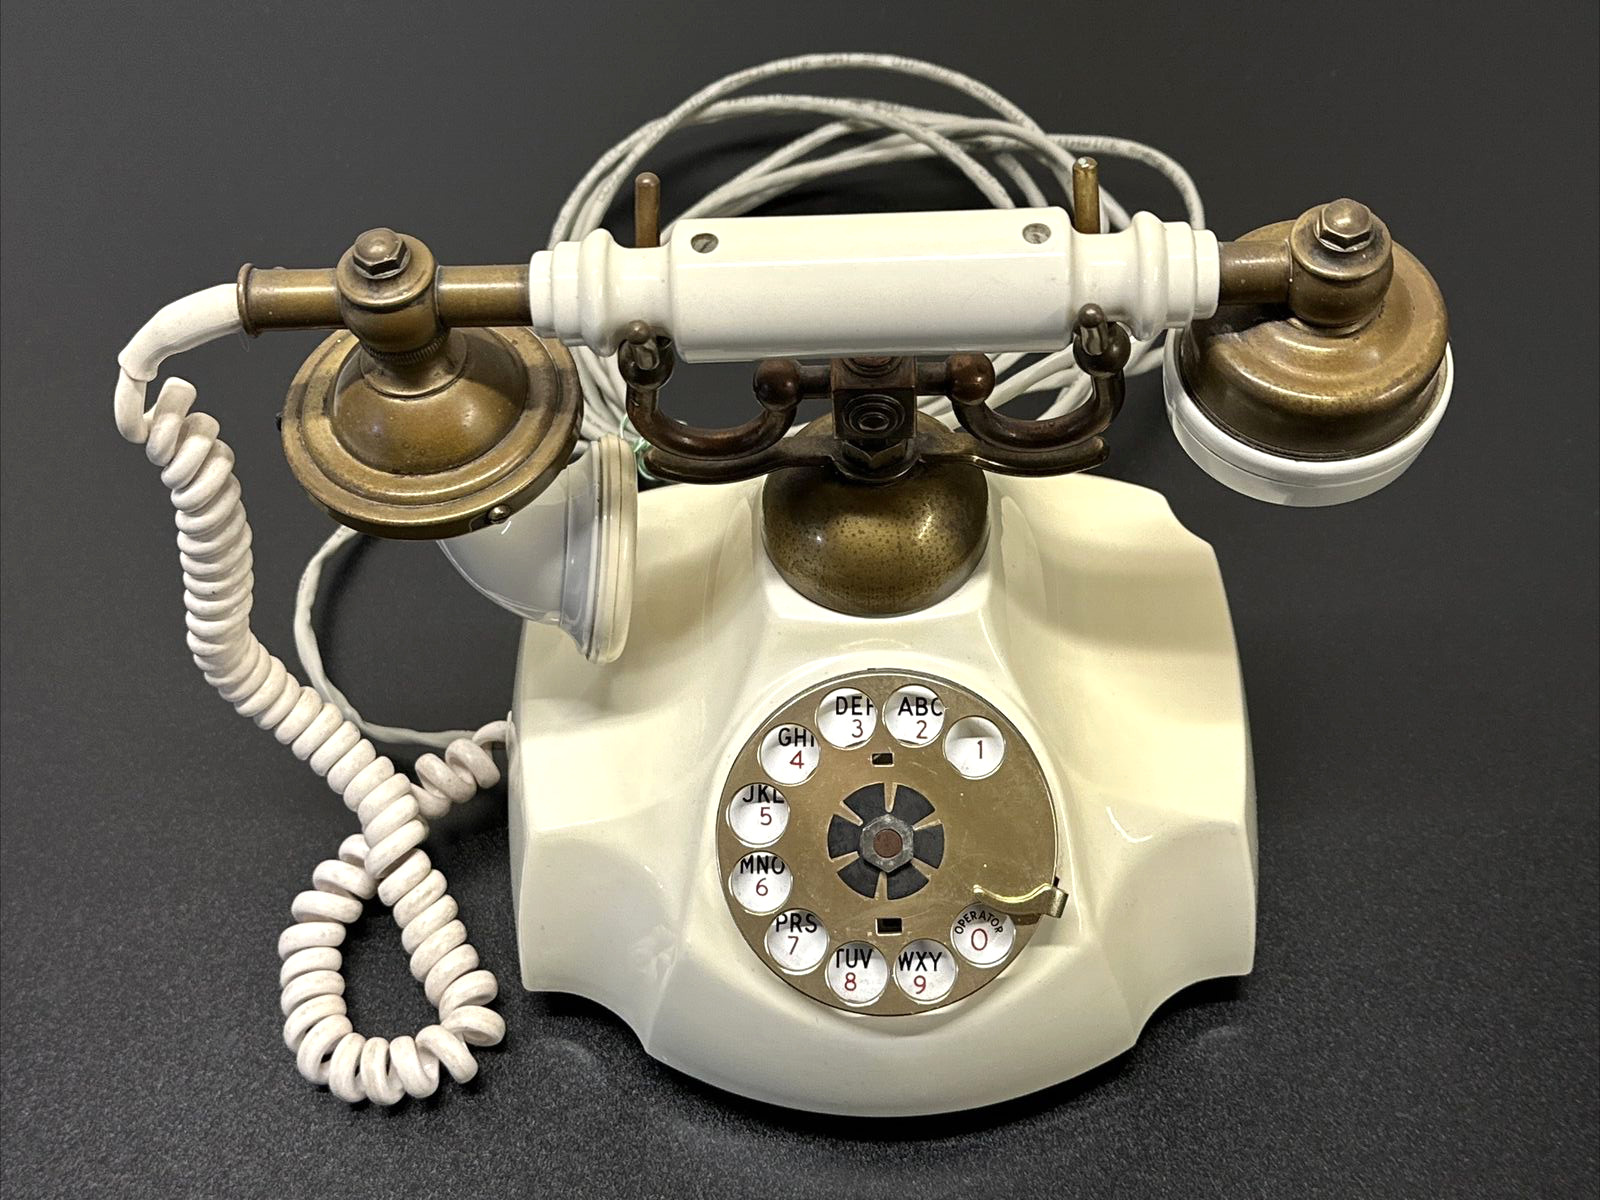 1968 US Telephone Co Rotary Contessa Regal French Cream Phone US-5 Works